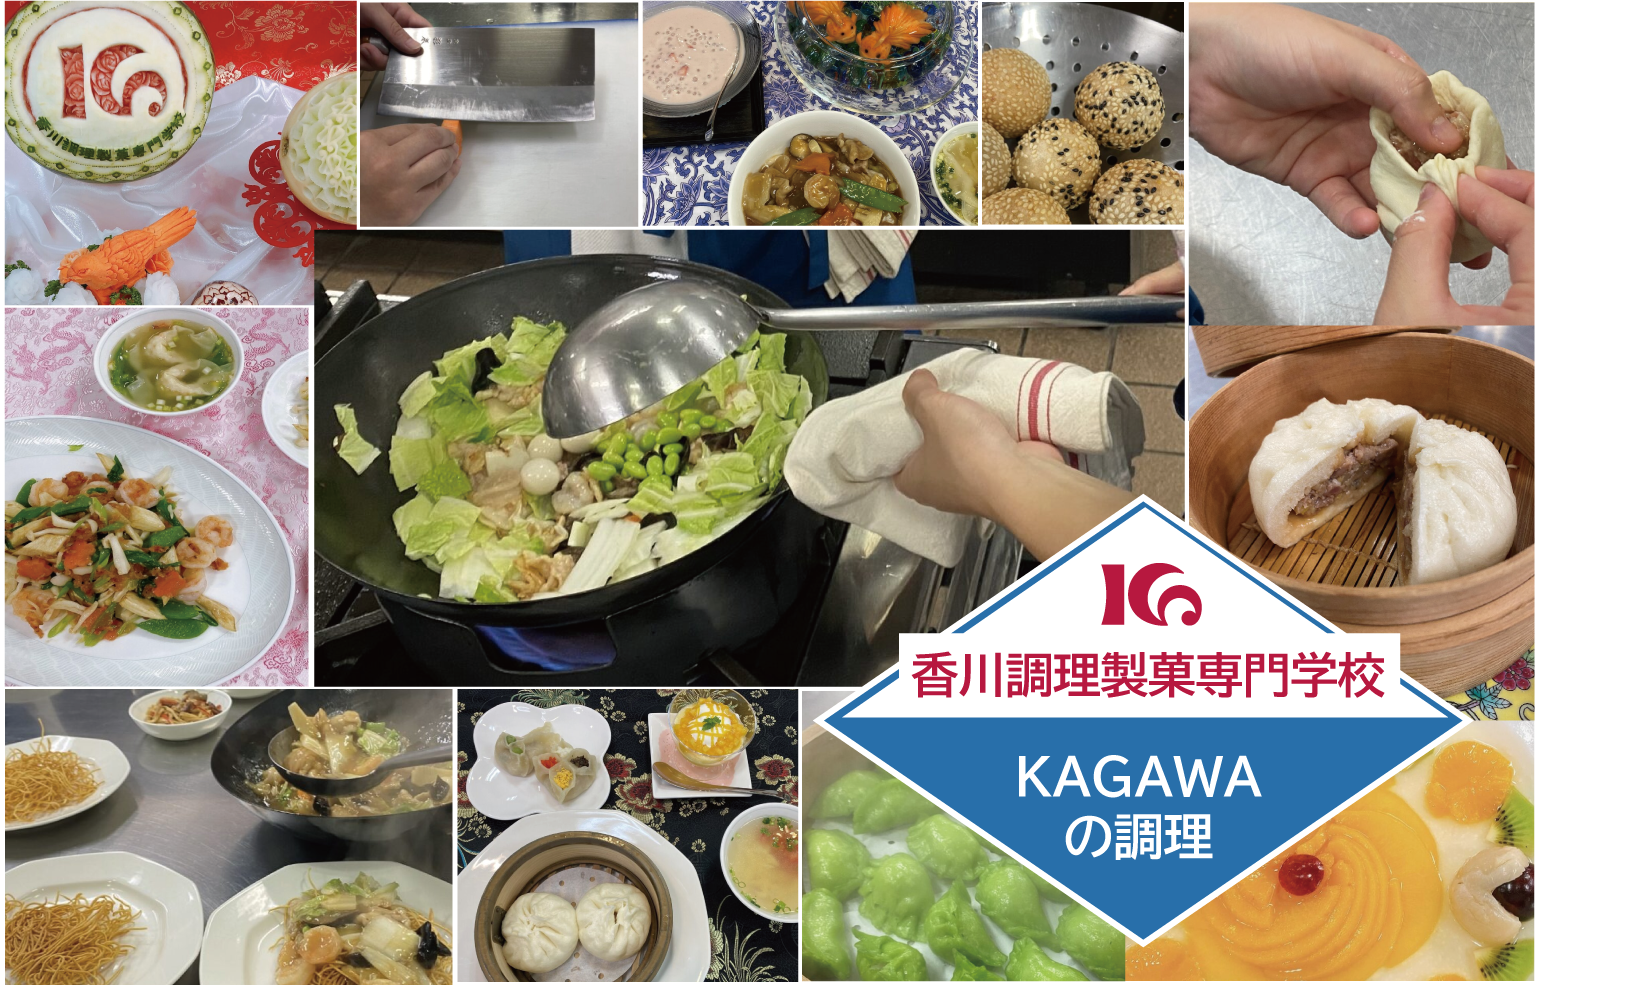 KAGAWAの調理で、ダイナミックさと繊細さを表現する